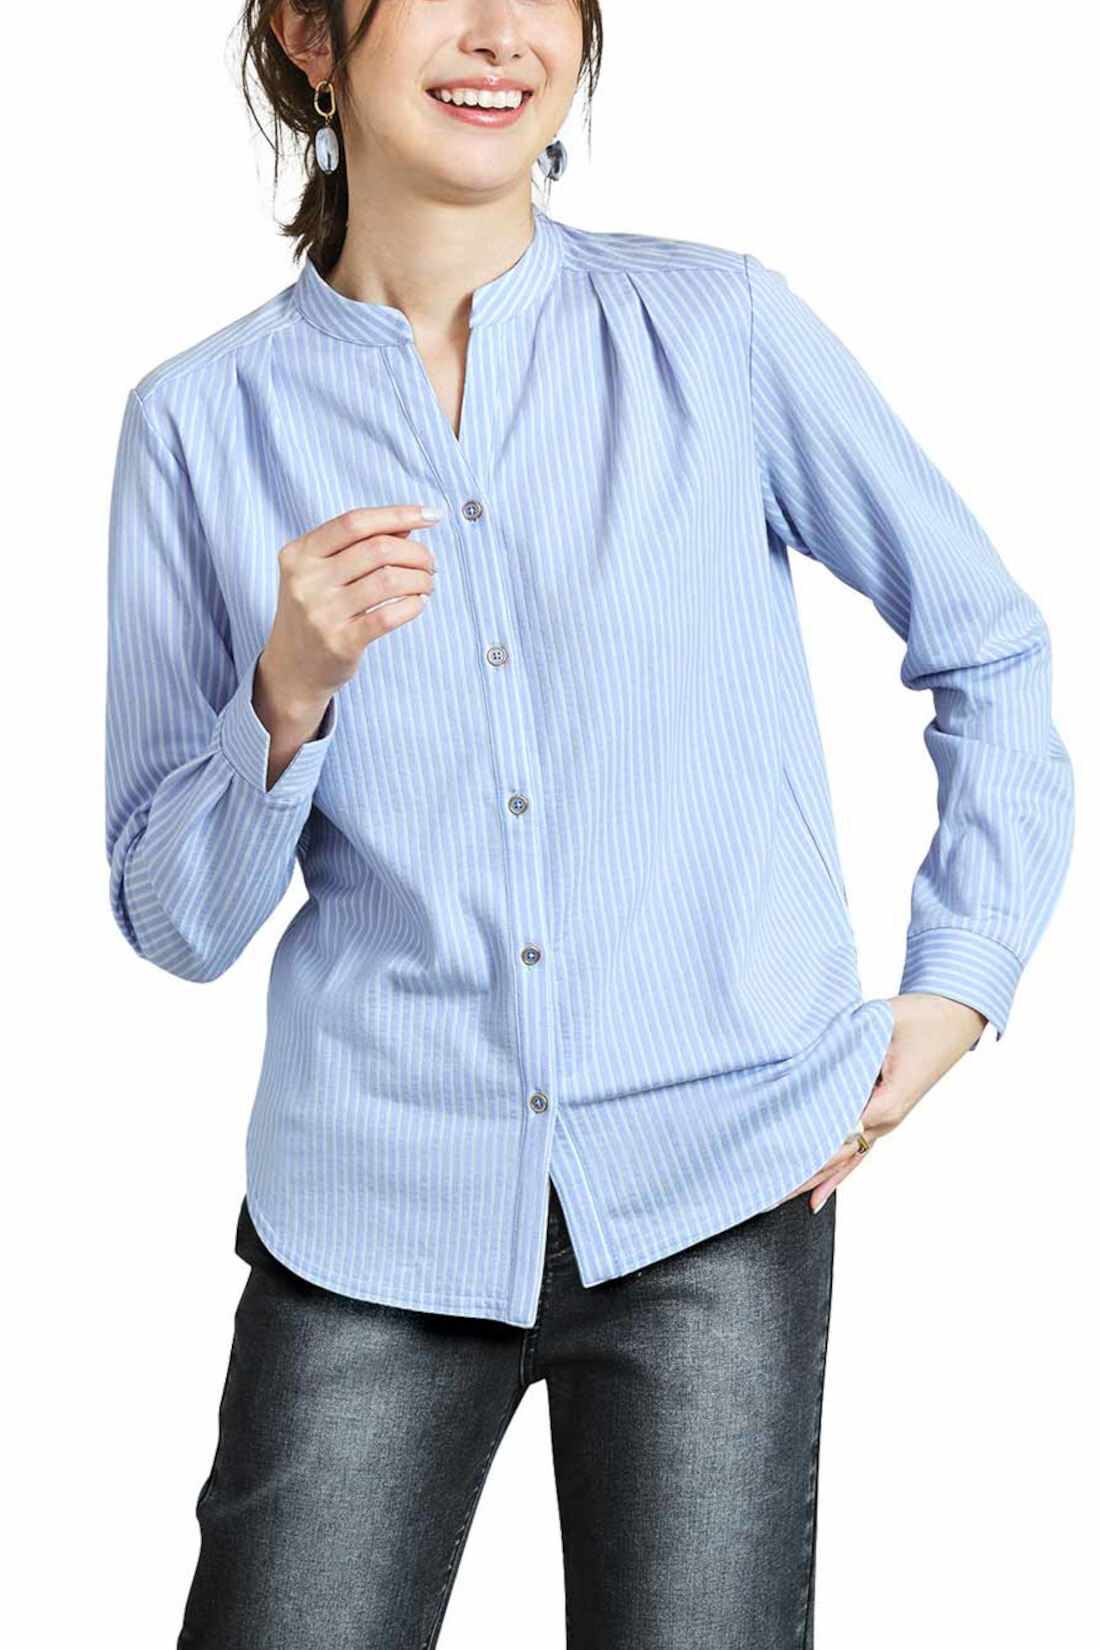 Real Stock|IEDIT[イディット]　抗菌防臭がうれしい きちんとシャツ見えして伸びやかな 美ノビシャツブラウス〈ブルー〉